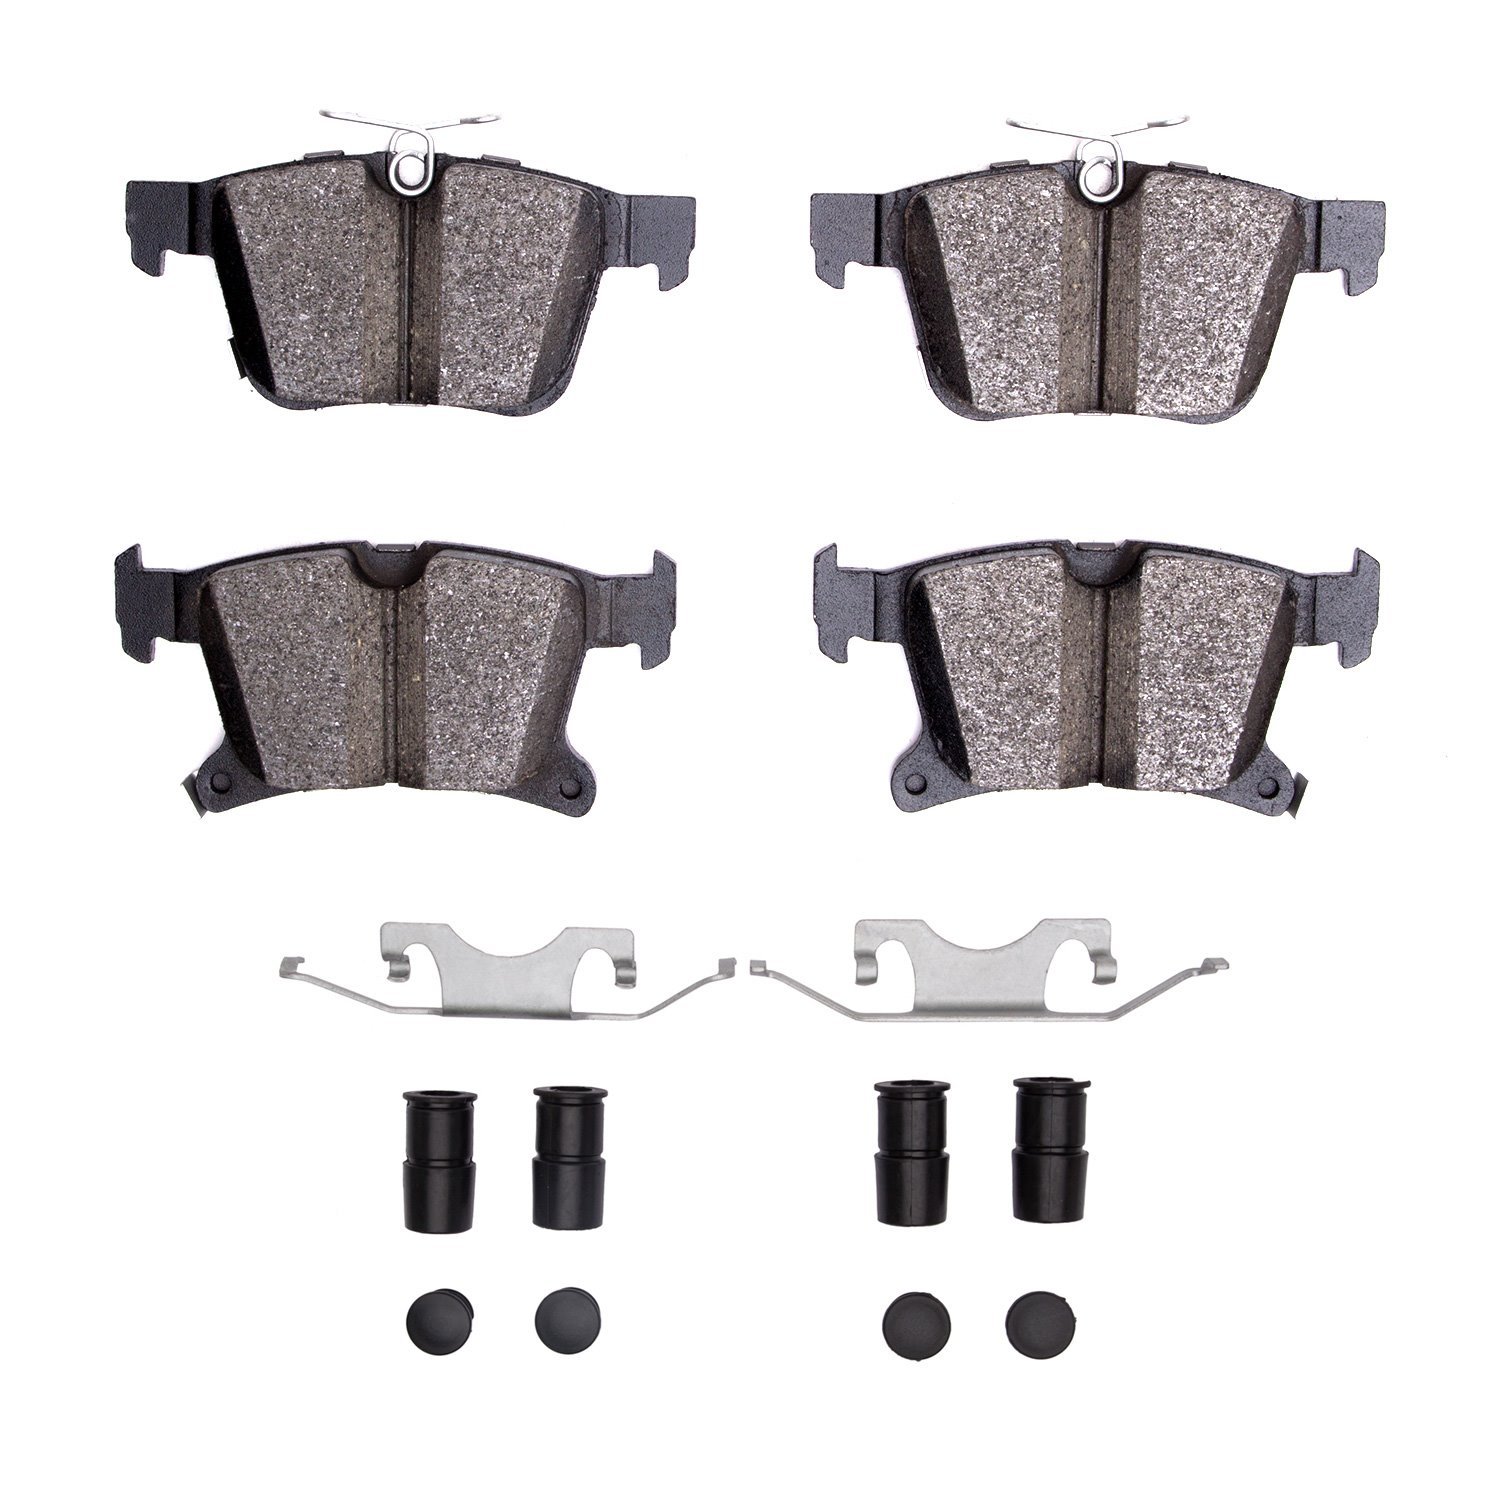 1310-1901-01 3000-Series Ceramic Brake Pads & Hardware Kit, Fits Select Mopar, Position: Rear